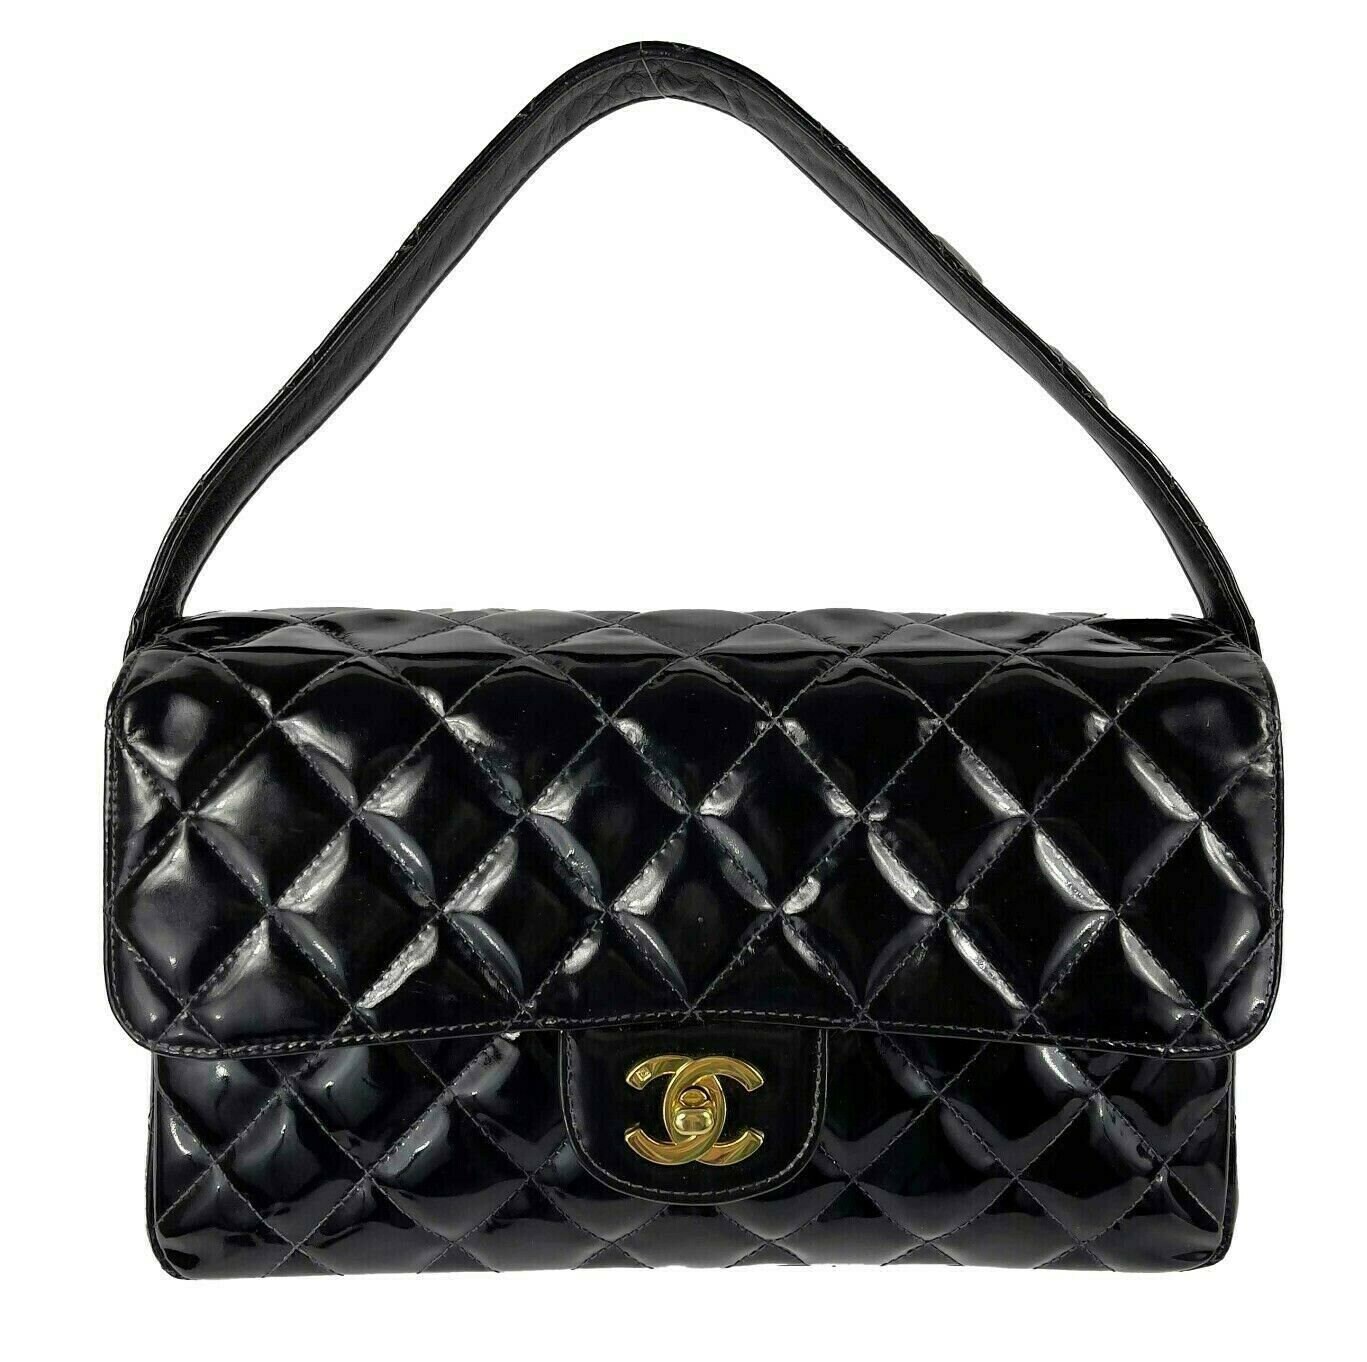 Chanel Auth Chanel V Stitch Leather Shoulder Bag Navy